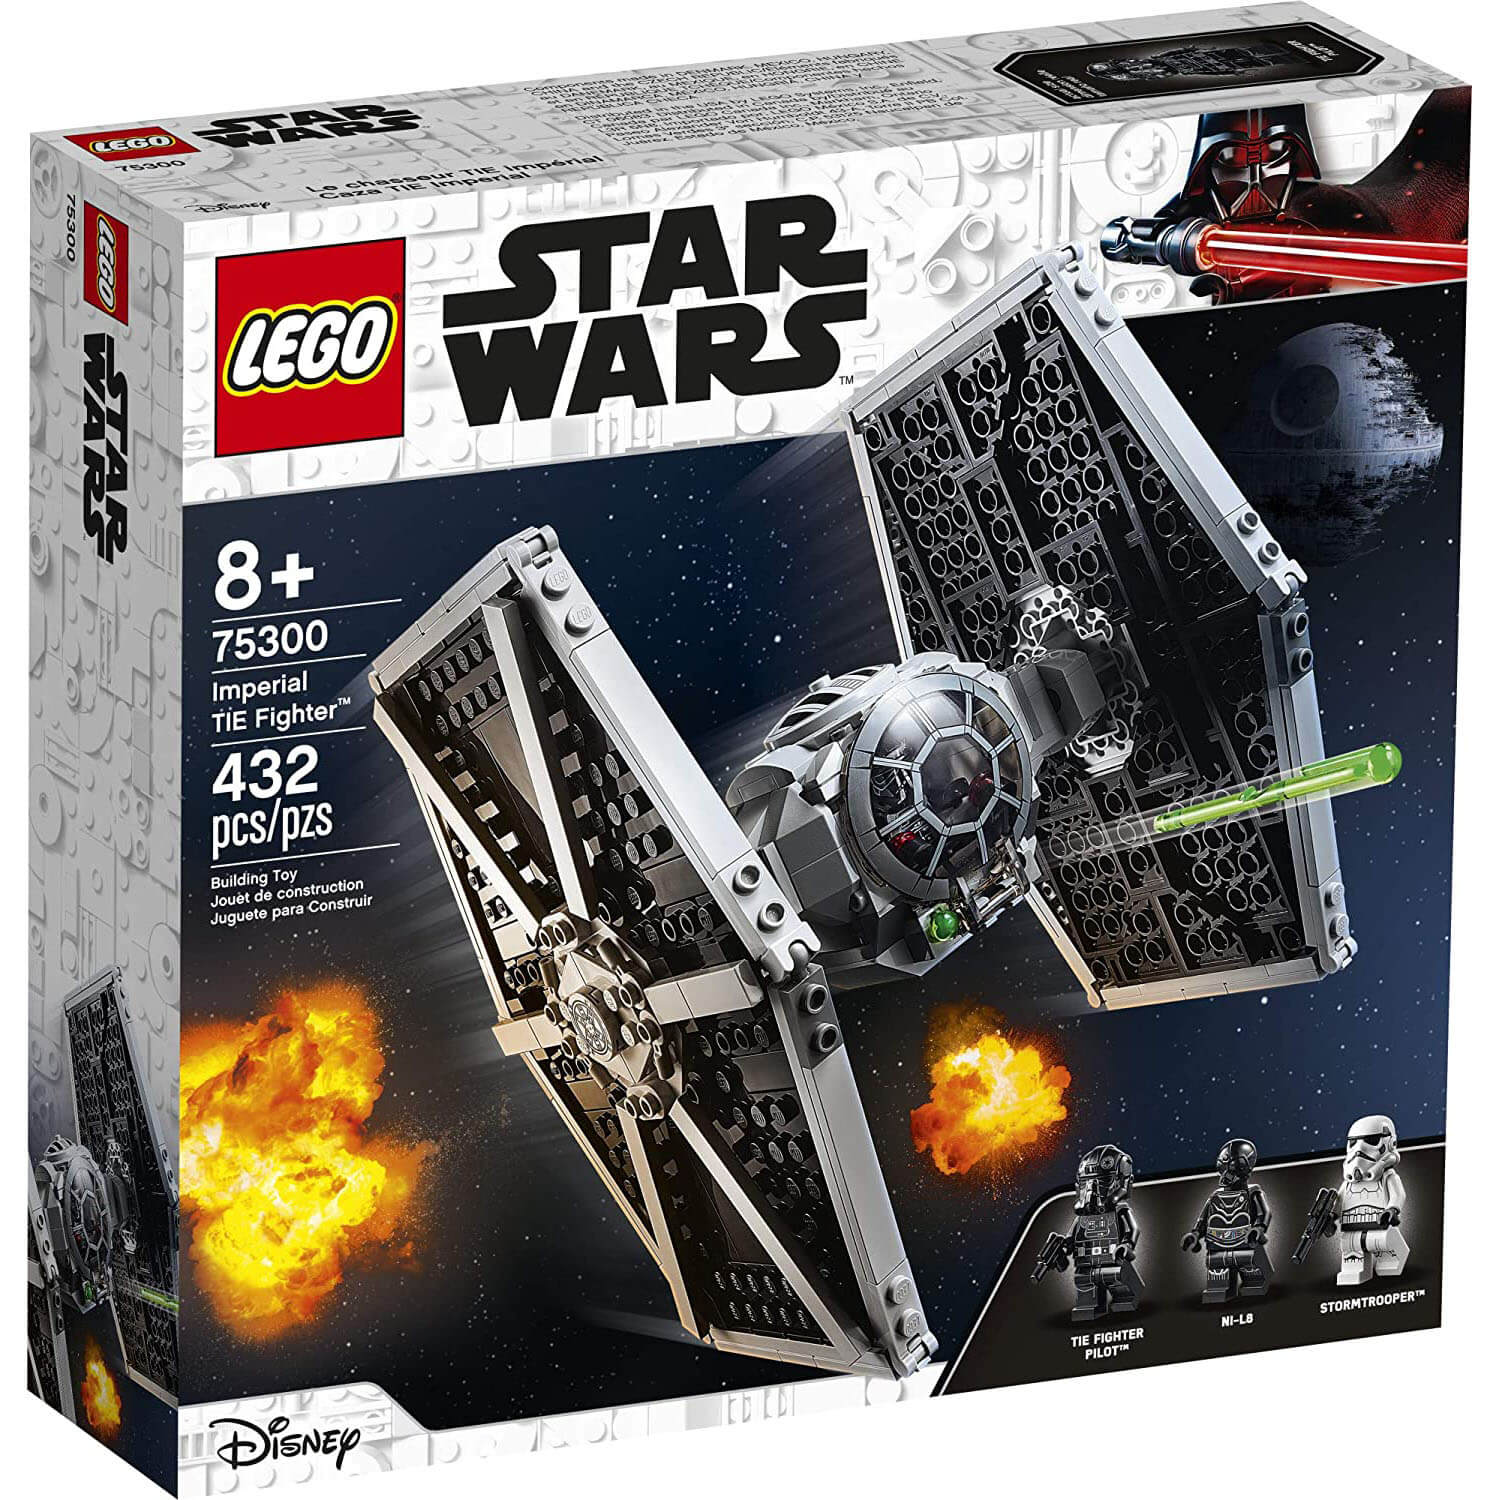 LEGO Star Wars Imperial TIE Fighter 432 Piece Building Set (75300)